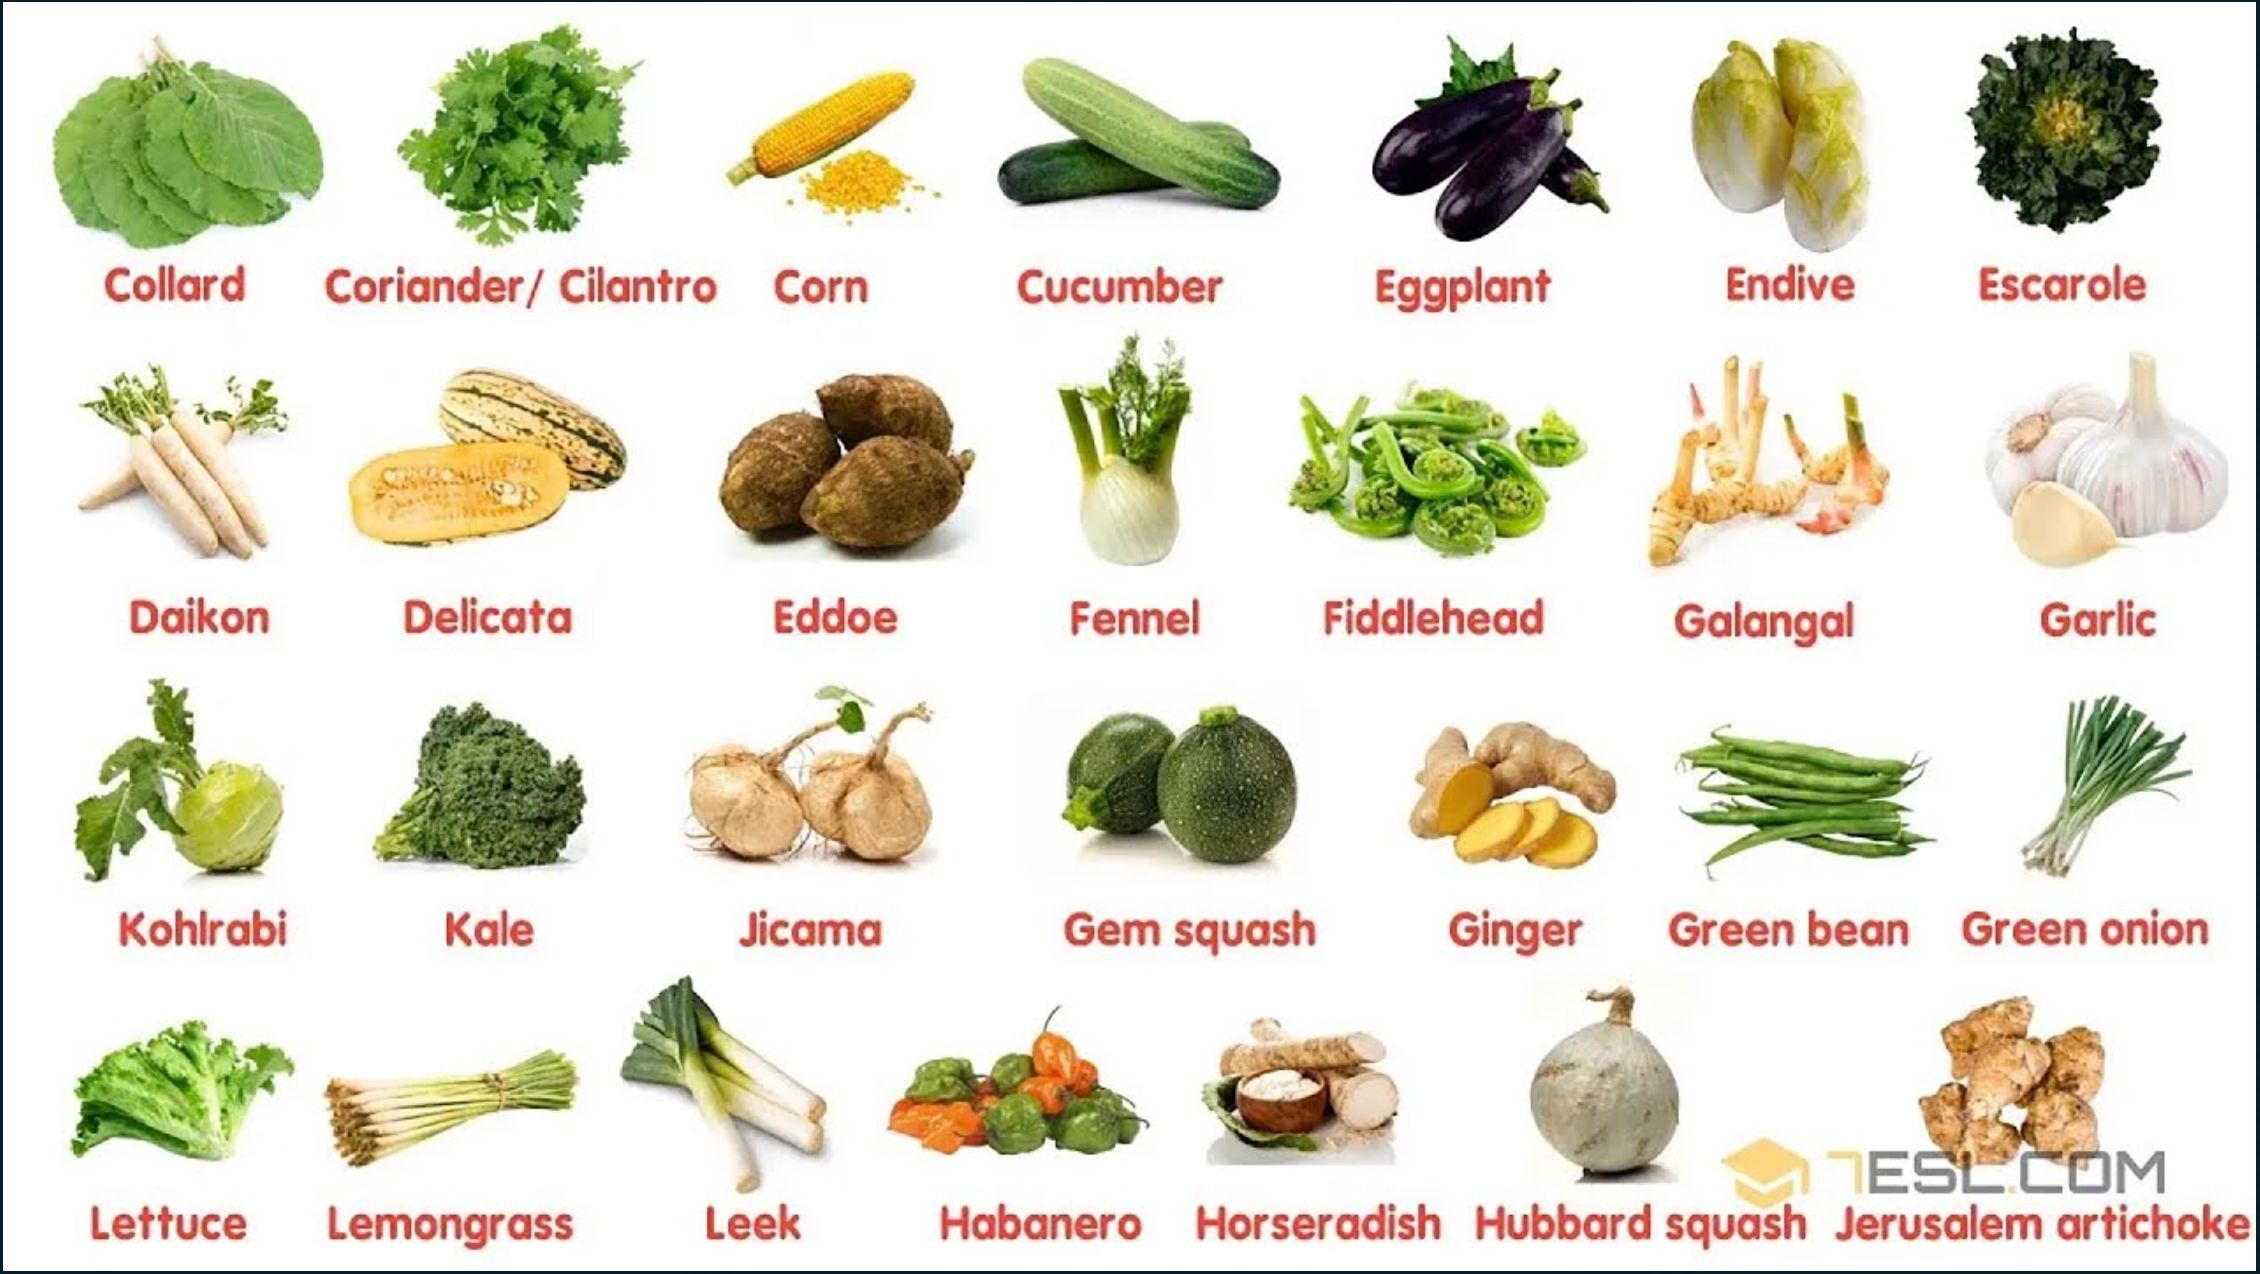 【7esl】100个蔬菜单词集合